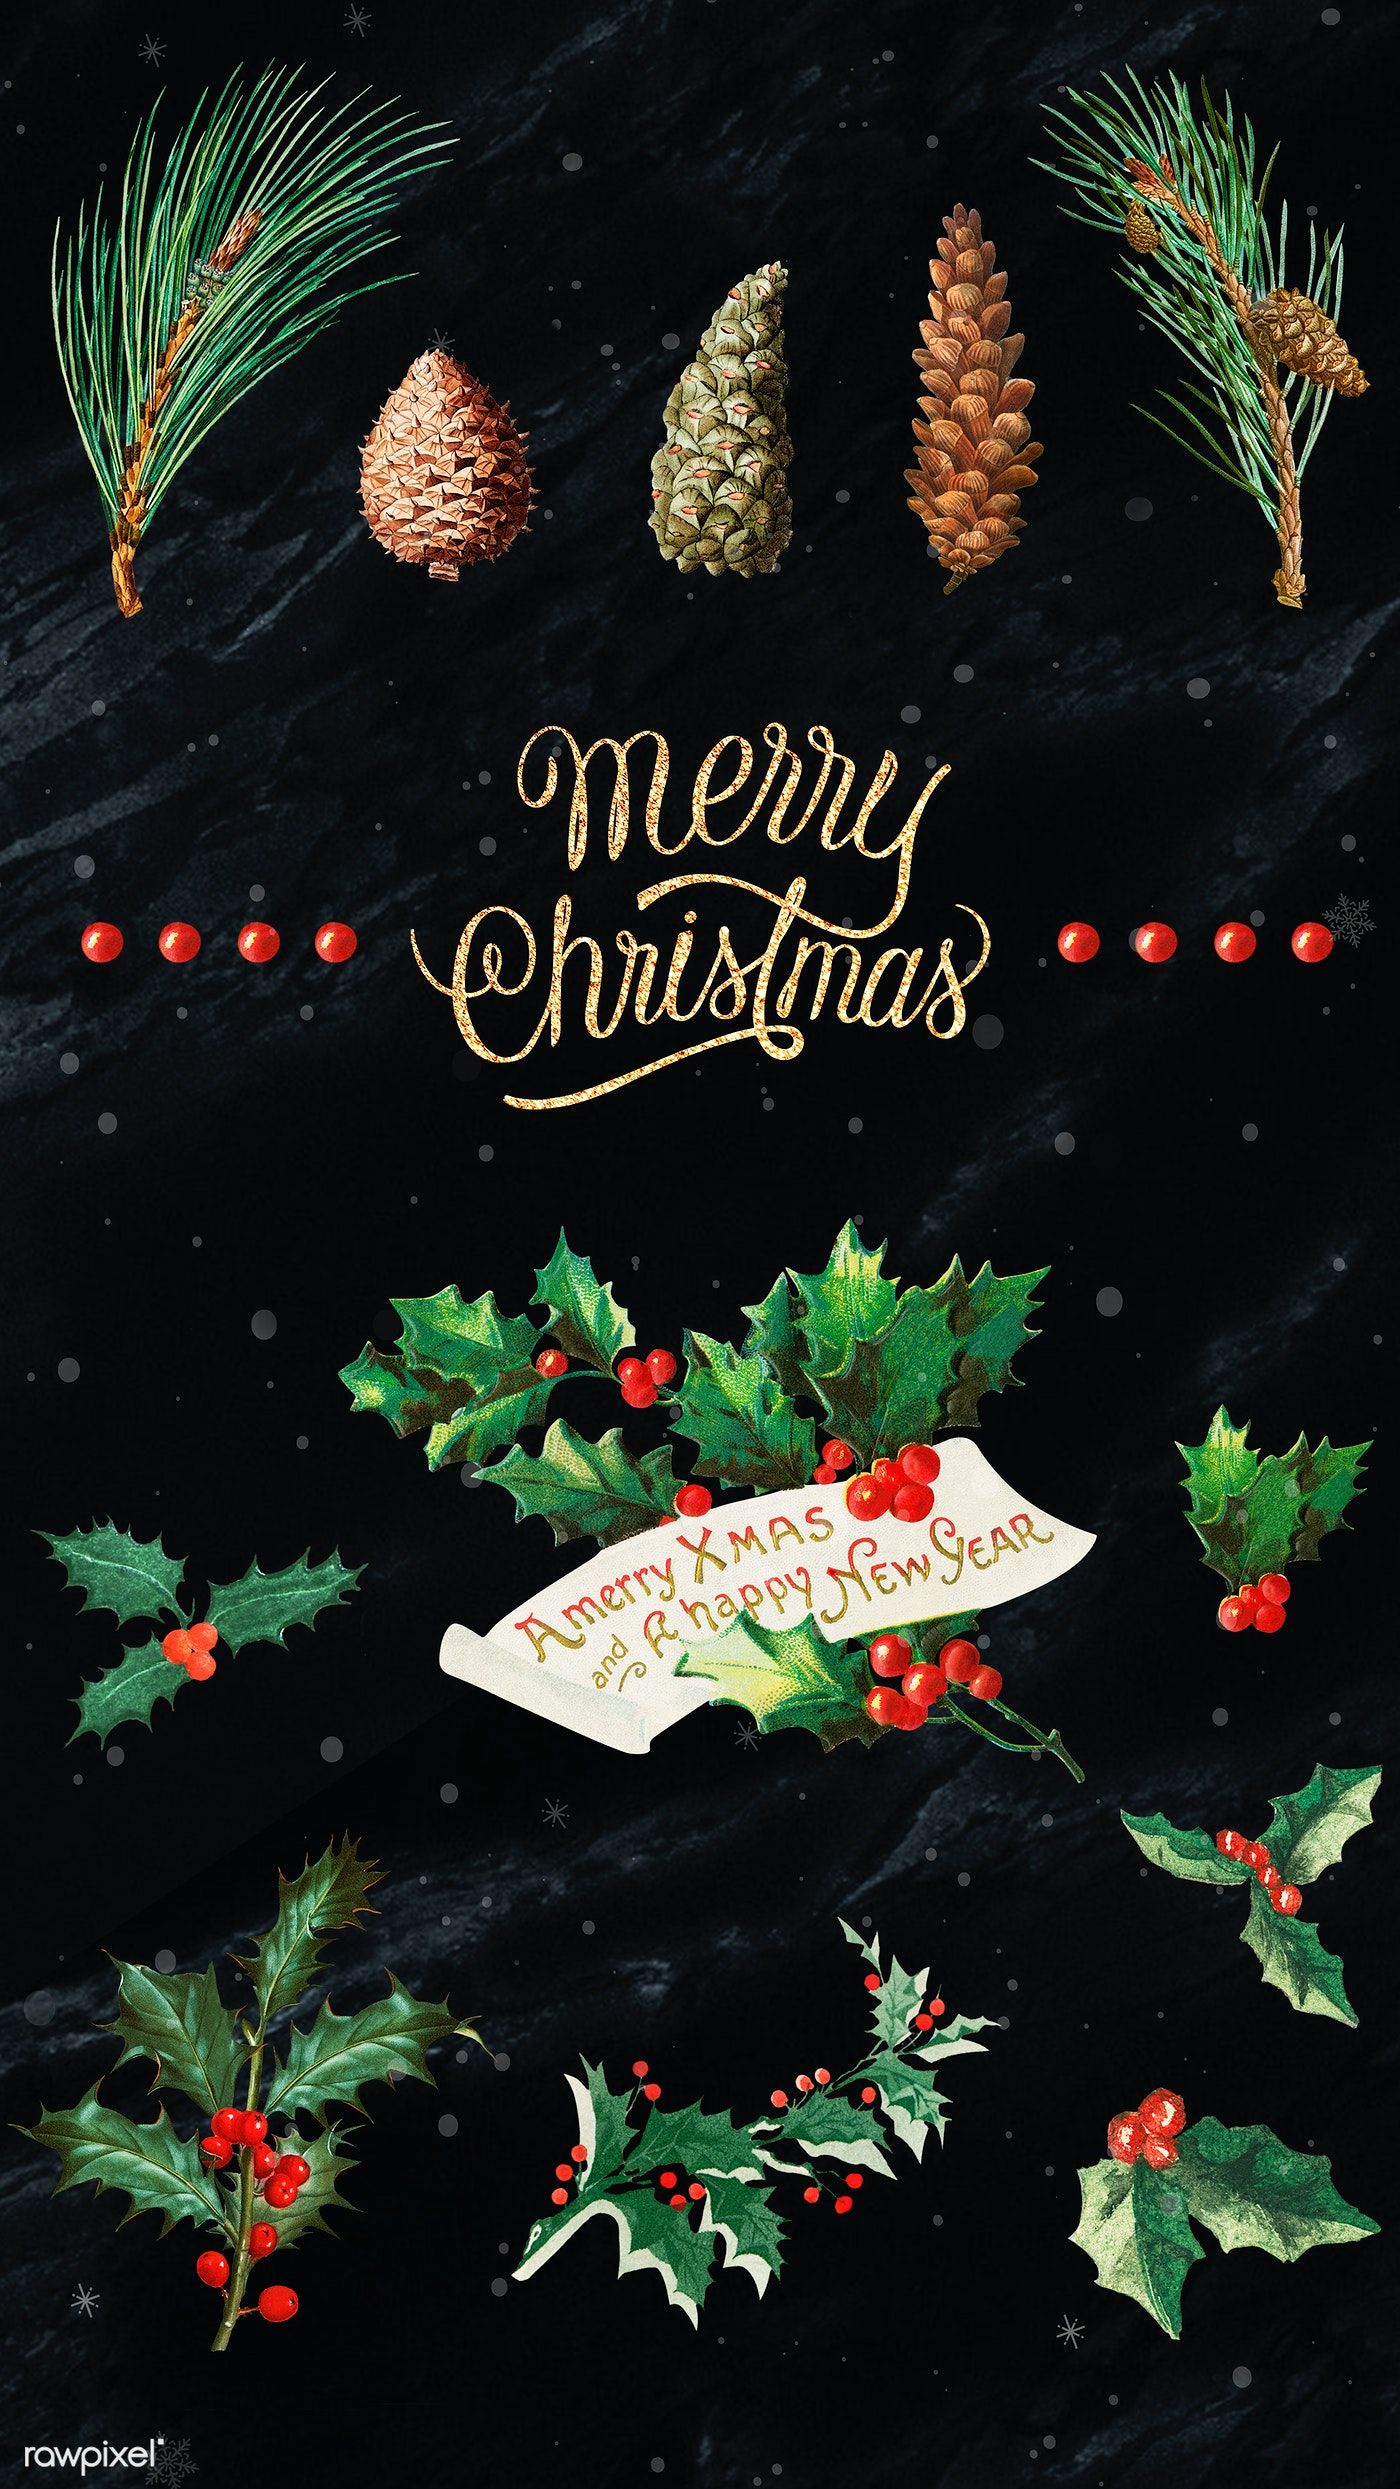 Merry Christmas - HD Wallpaper 